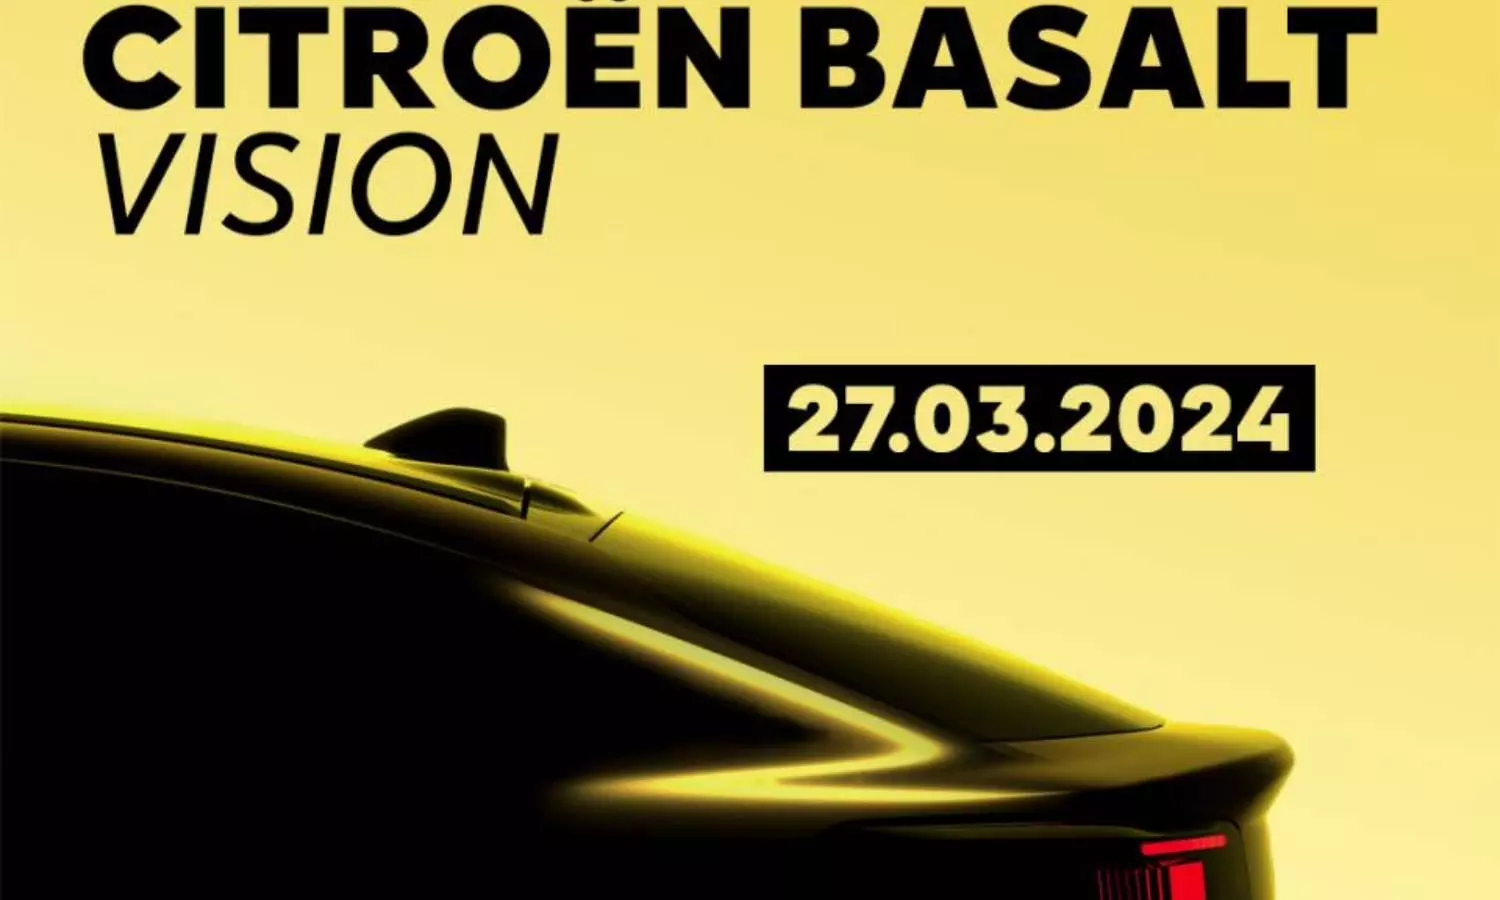 Citroën Basalt Vision SUV Price